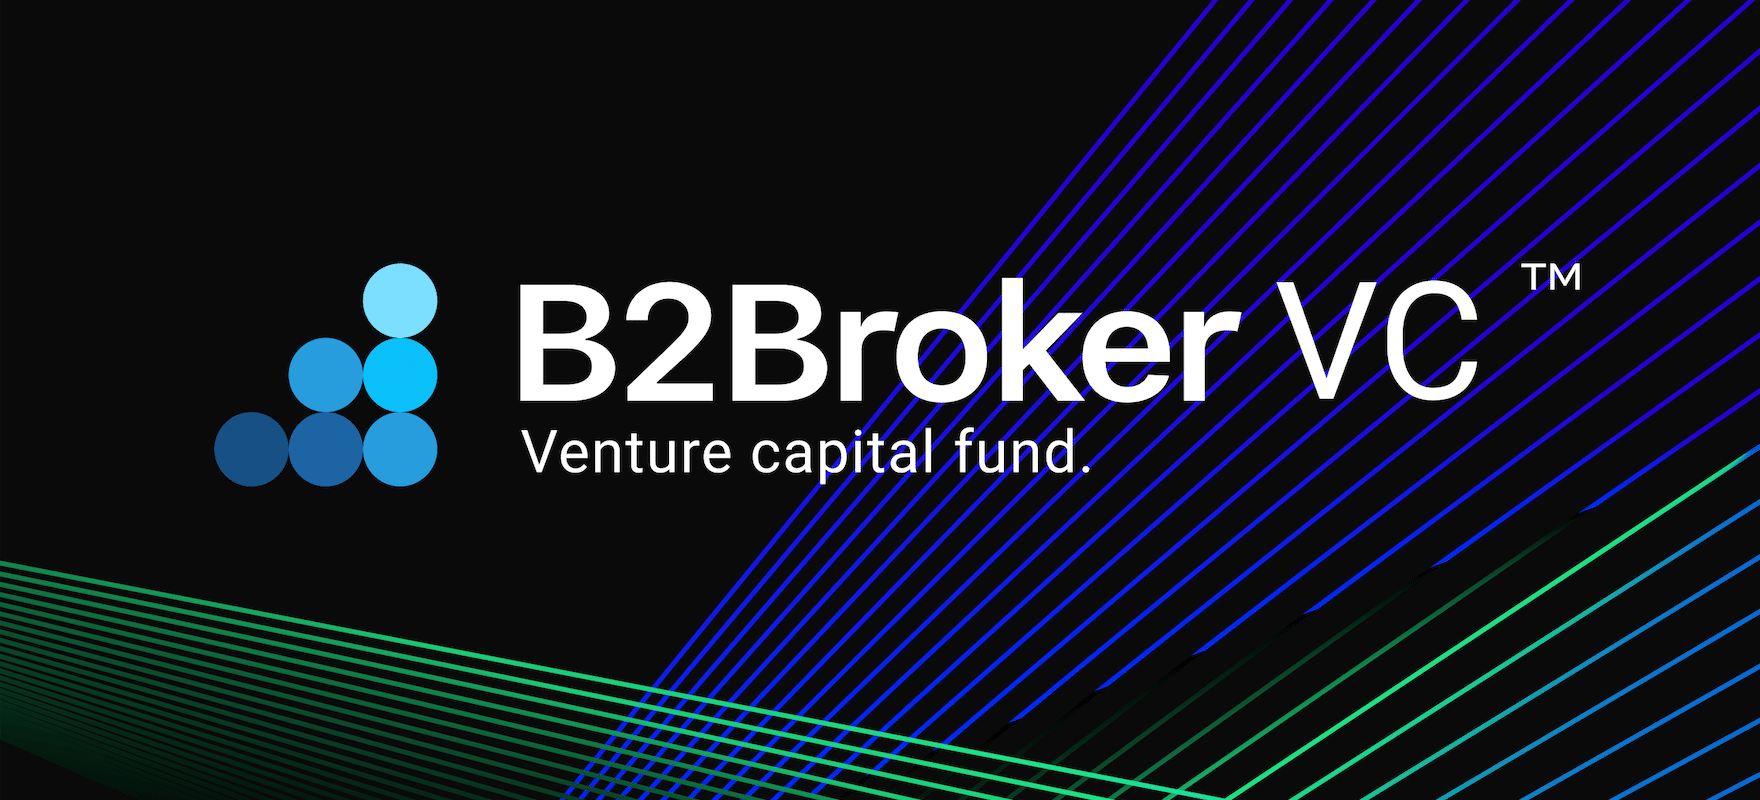 B2Broker Group Introduces $5 Million Venture Capital Fund